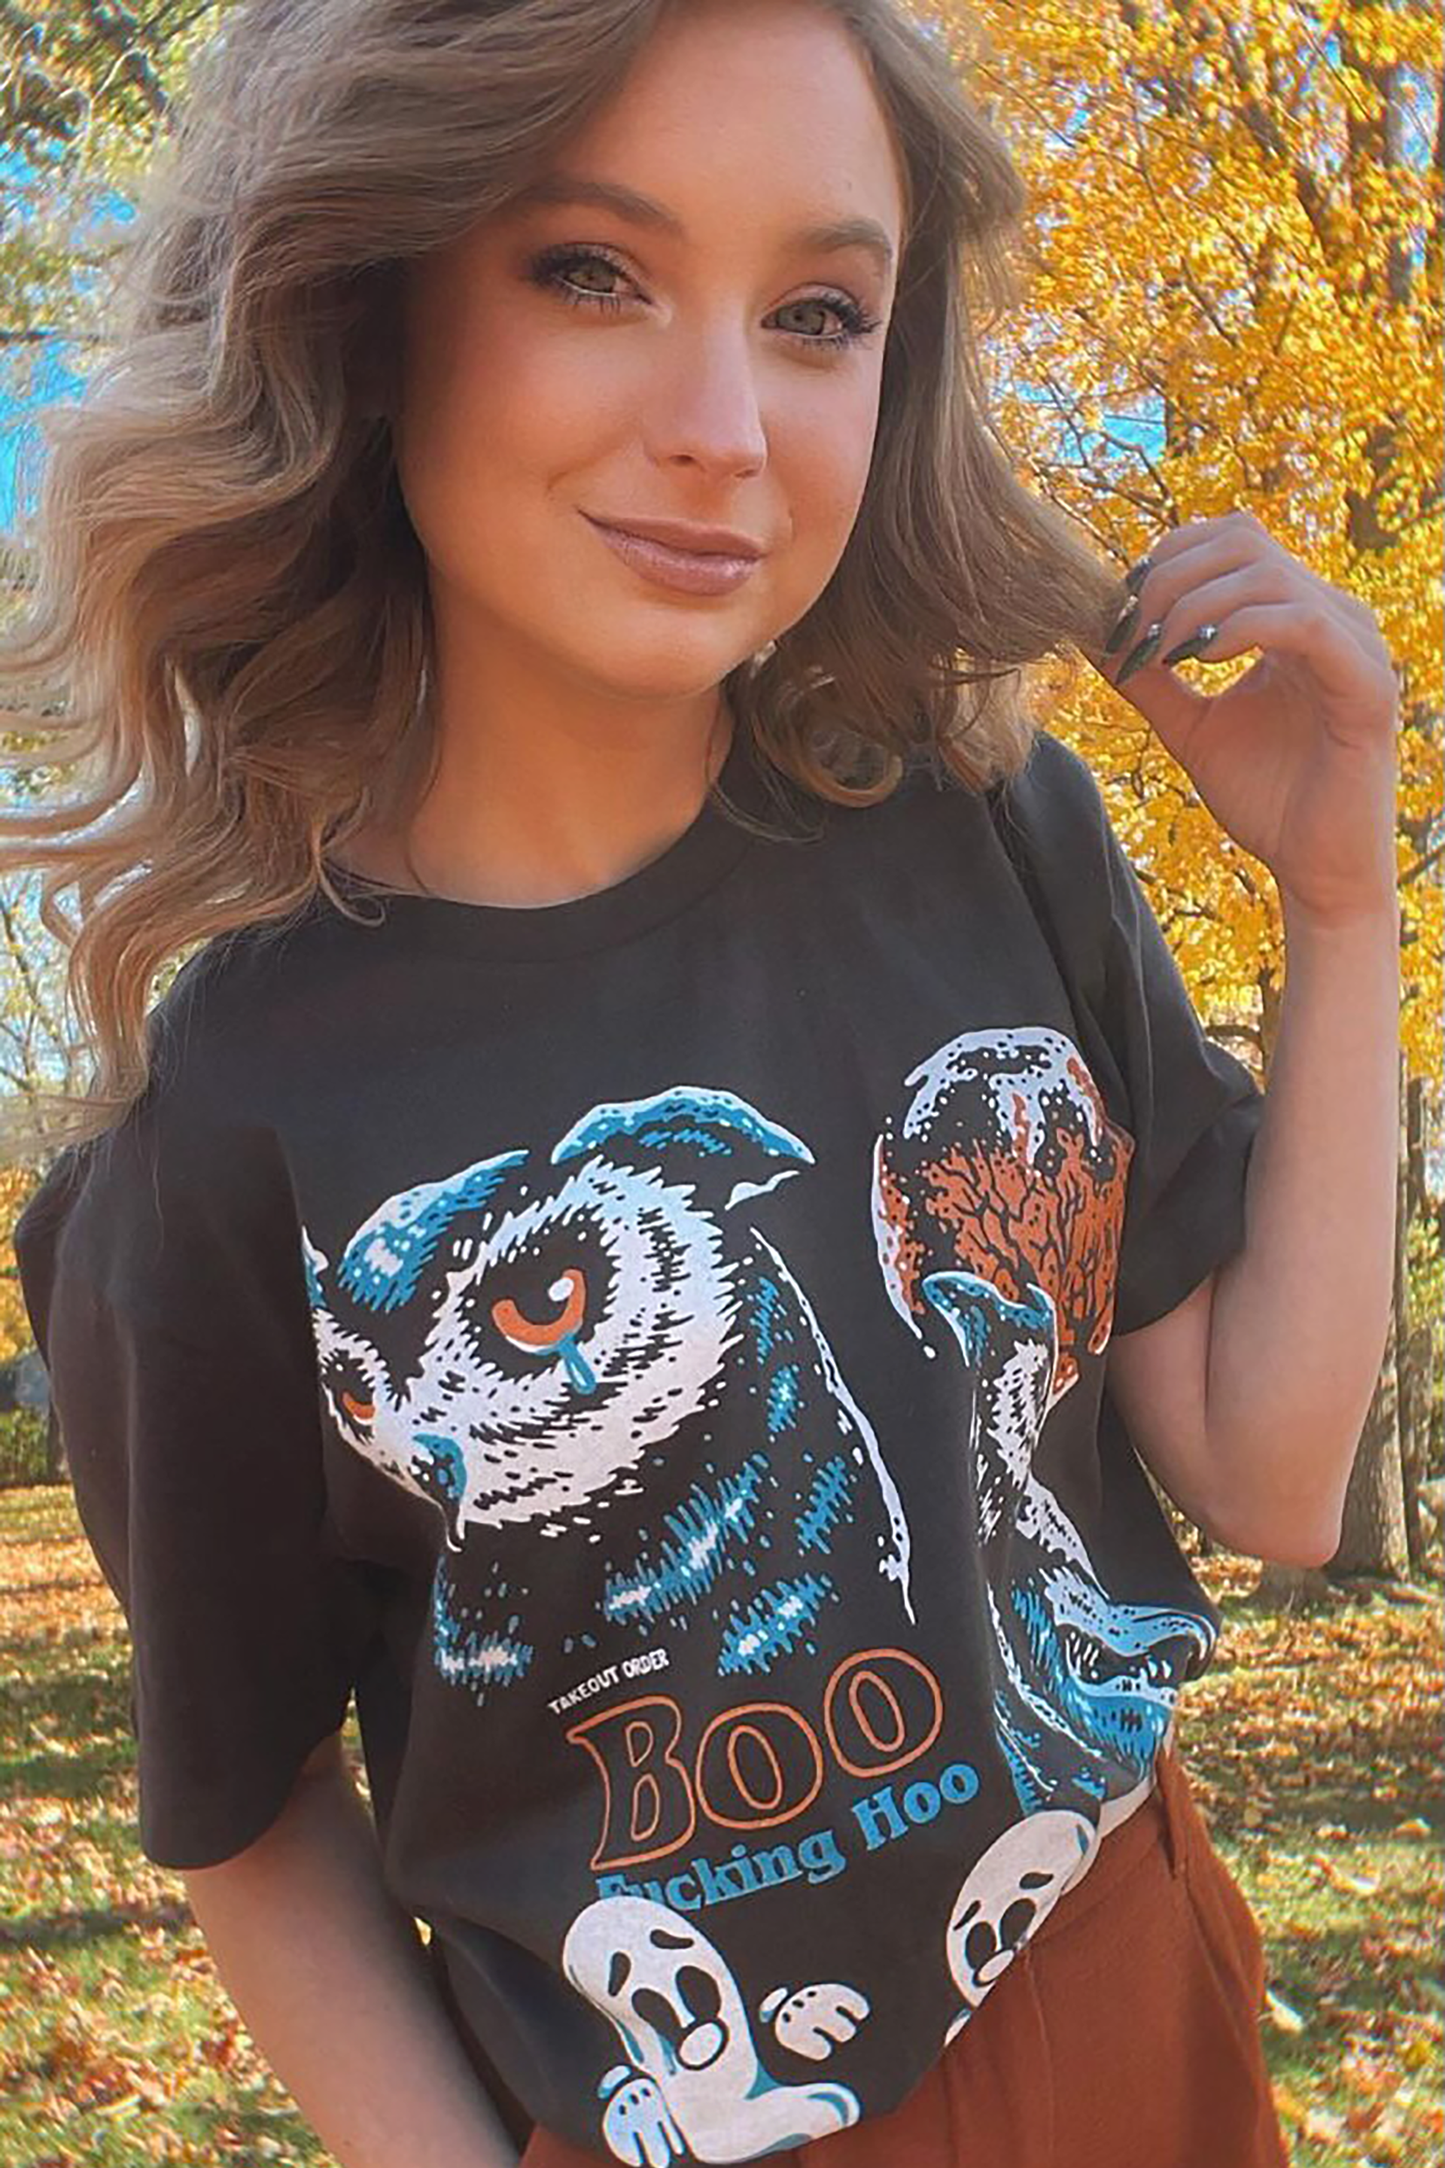 Boo Hoo T-shirt